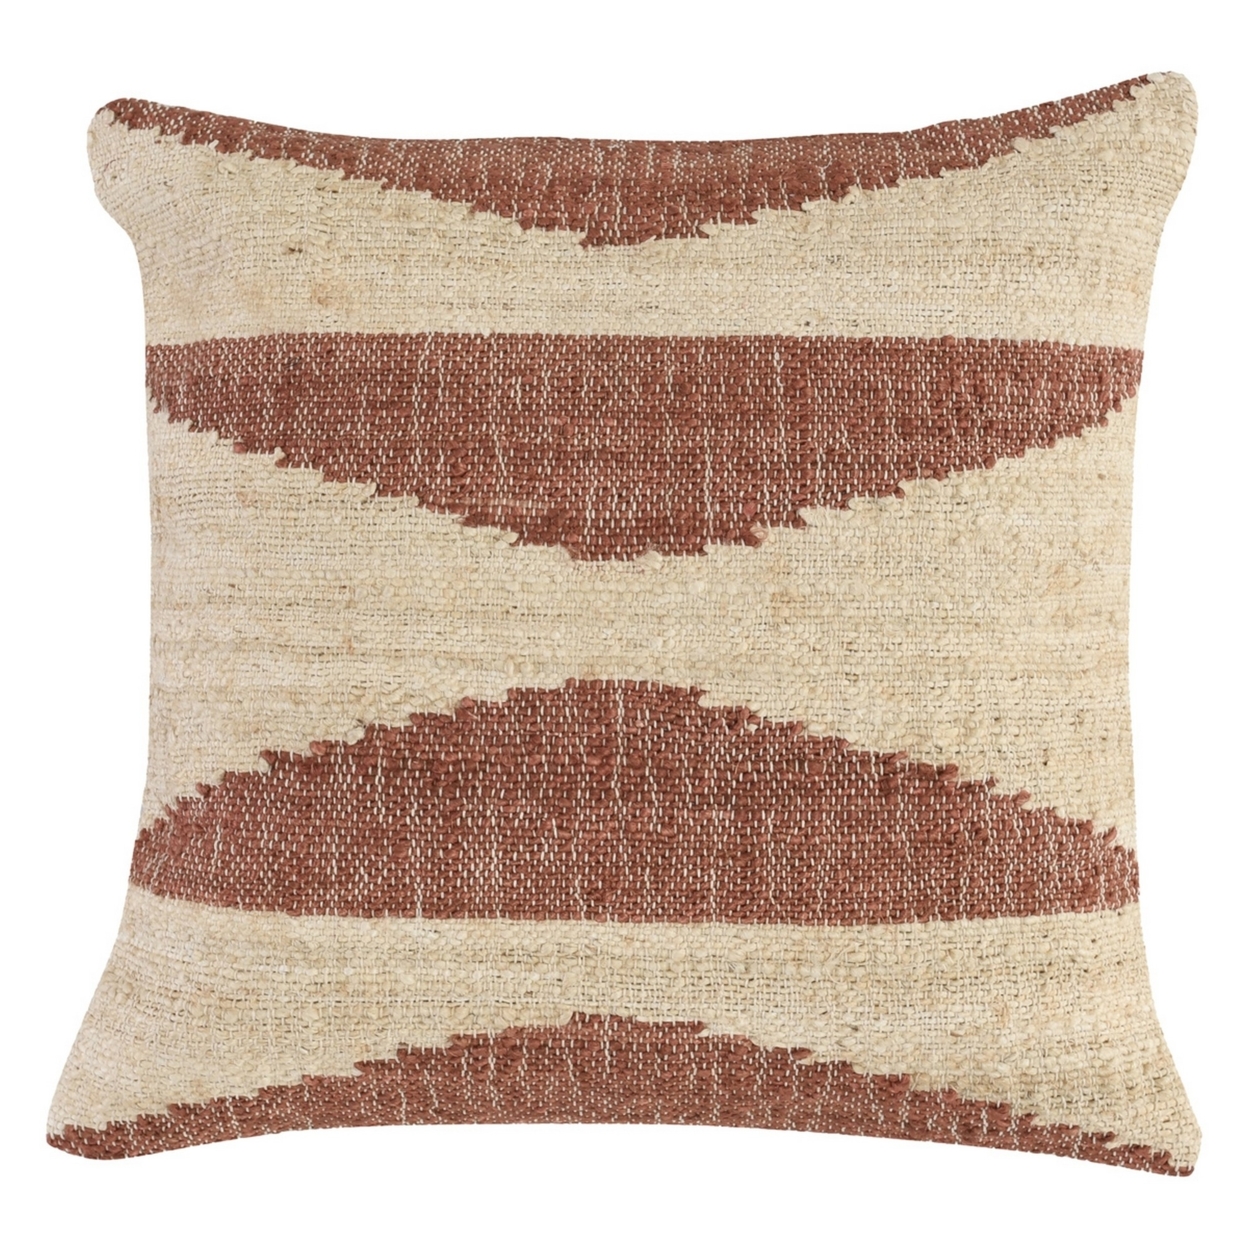 Henry 22 Inch Square Fabric Accent Throw Pillow, Geometric Design, Beige, Saltoro Sherpi